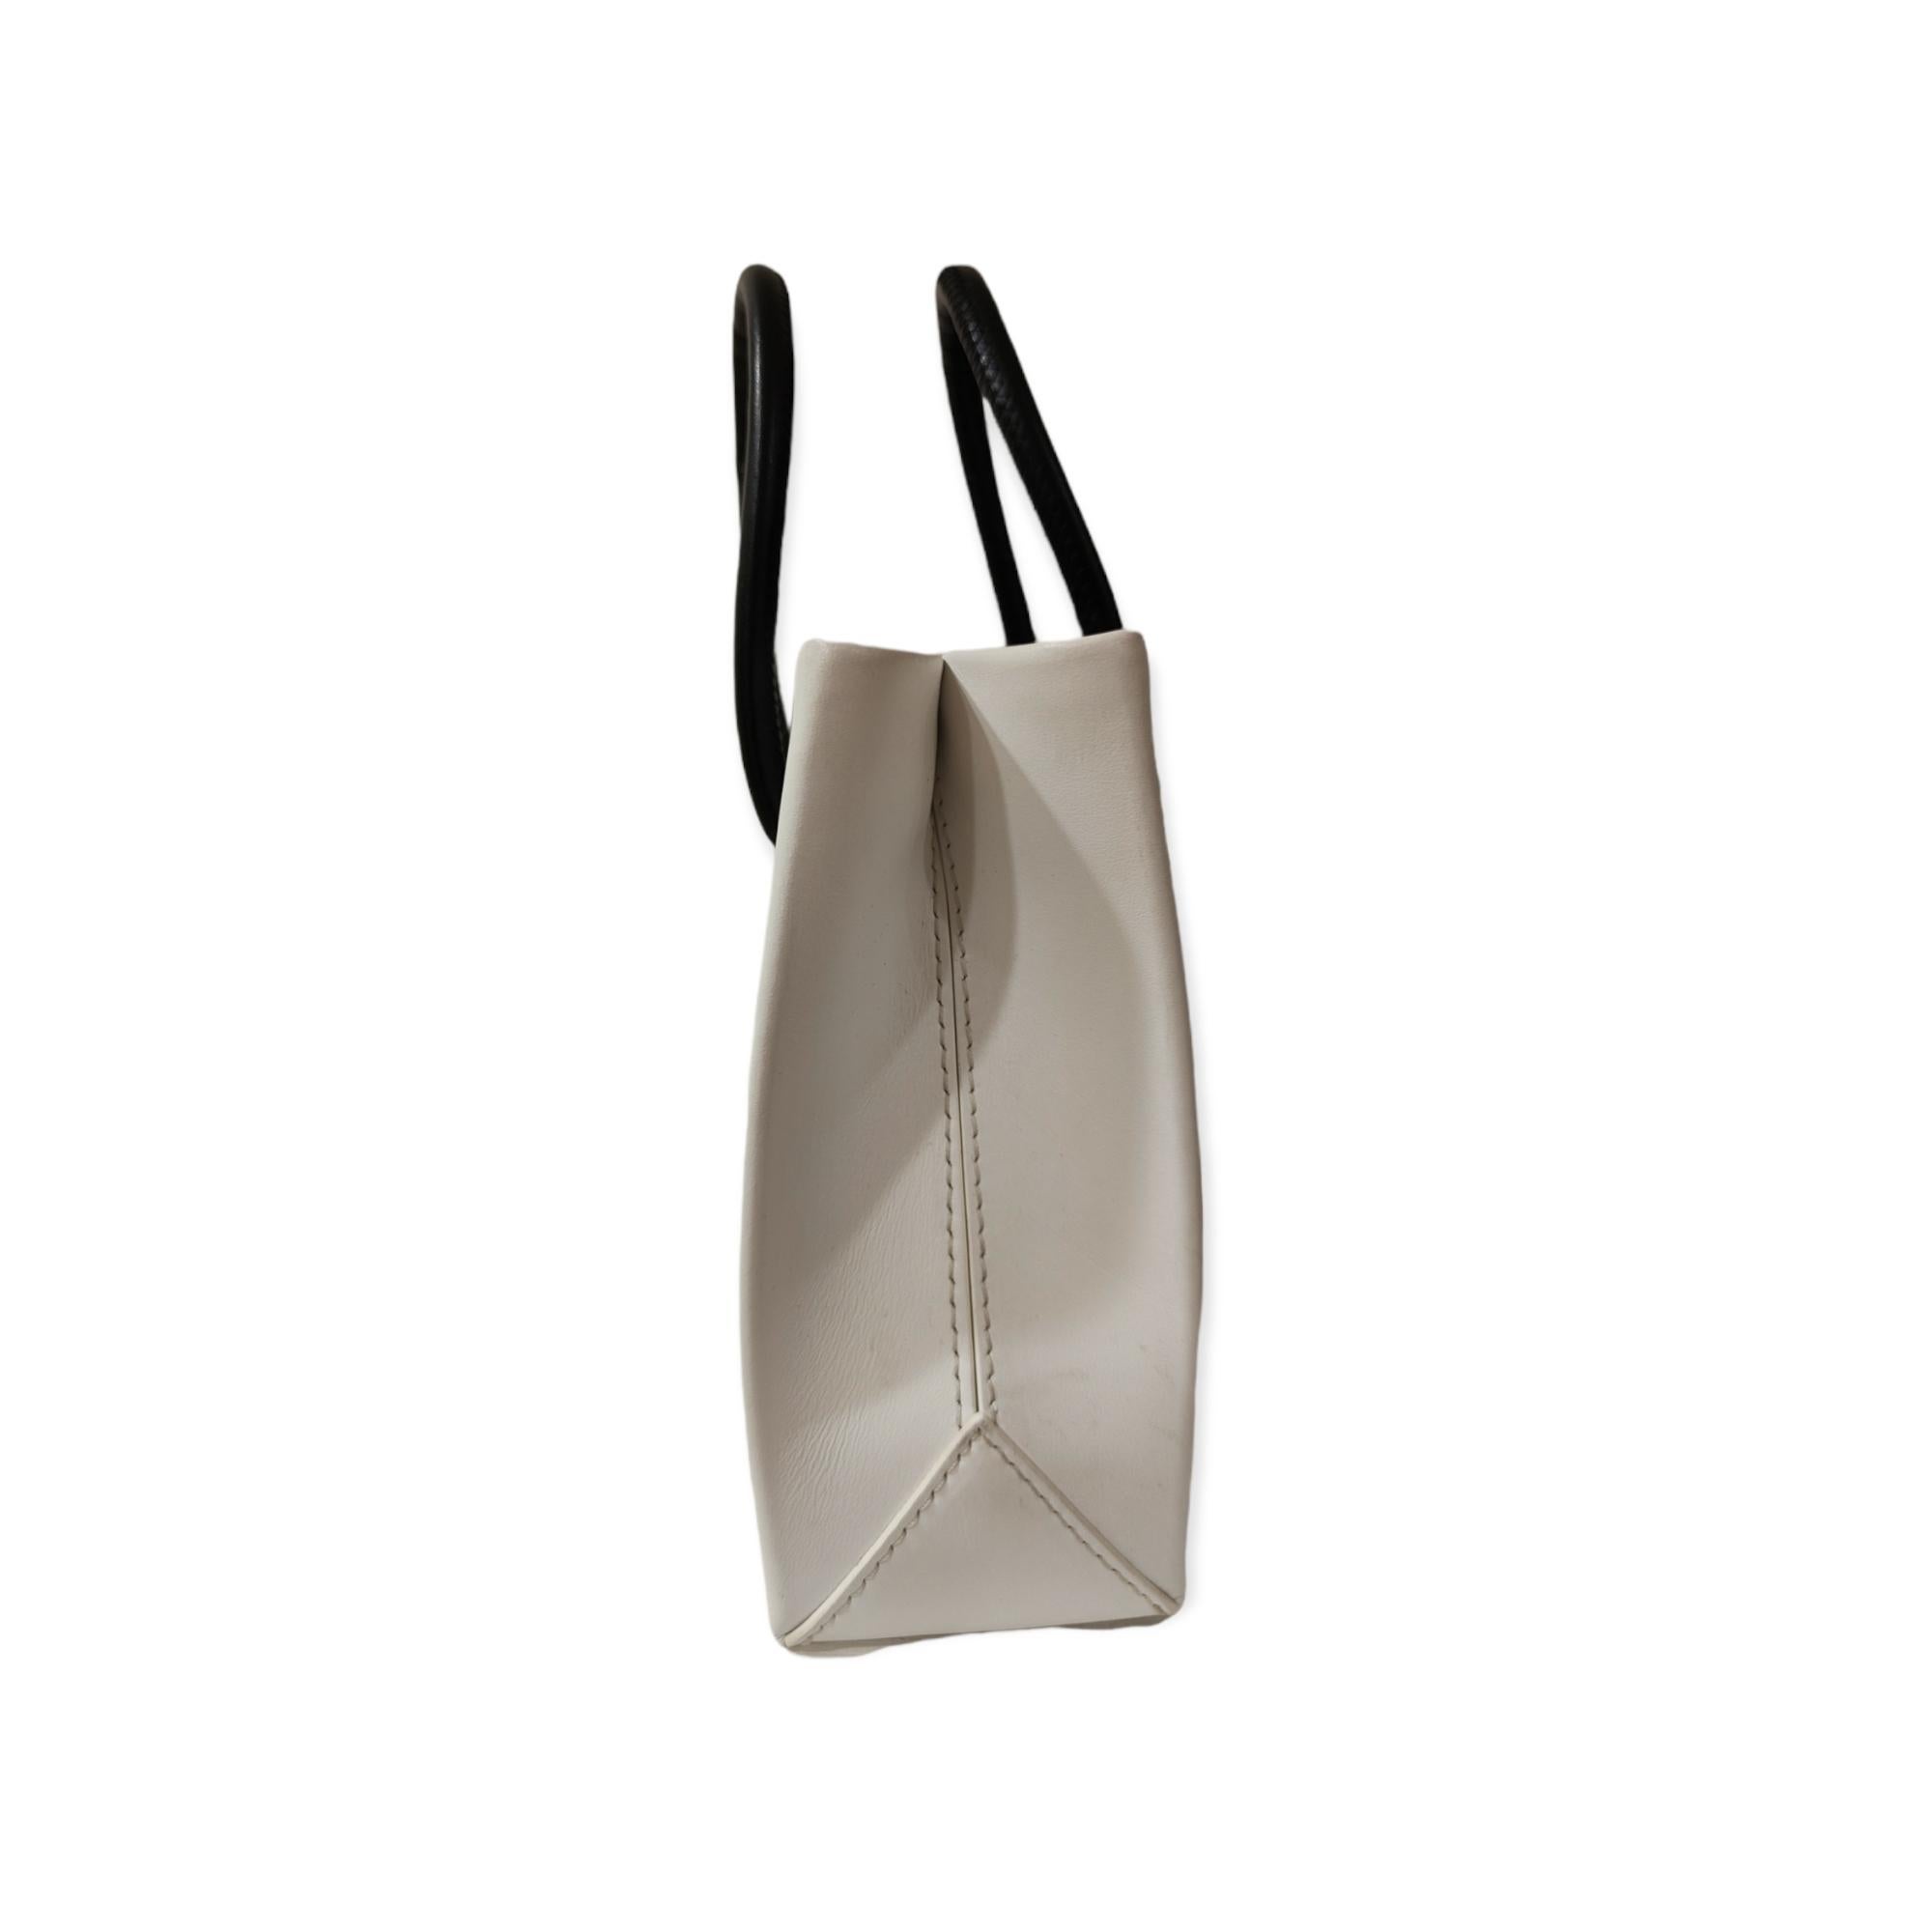 Moschino White and Black leather small shoulderbag handlebag
16 * 16 cm, 7 cm depth